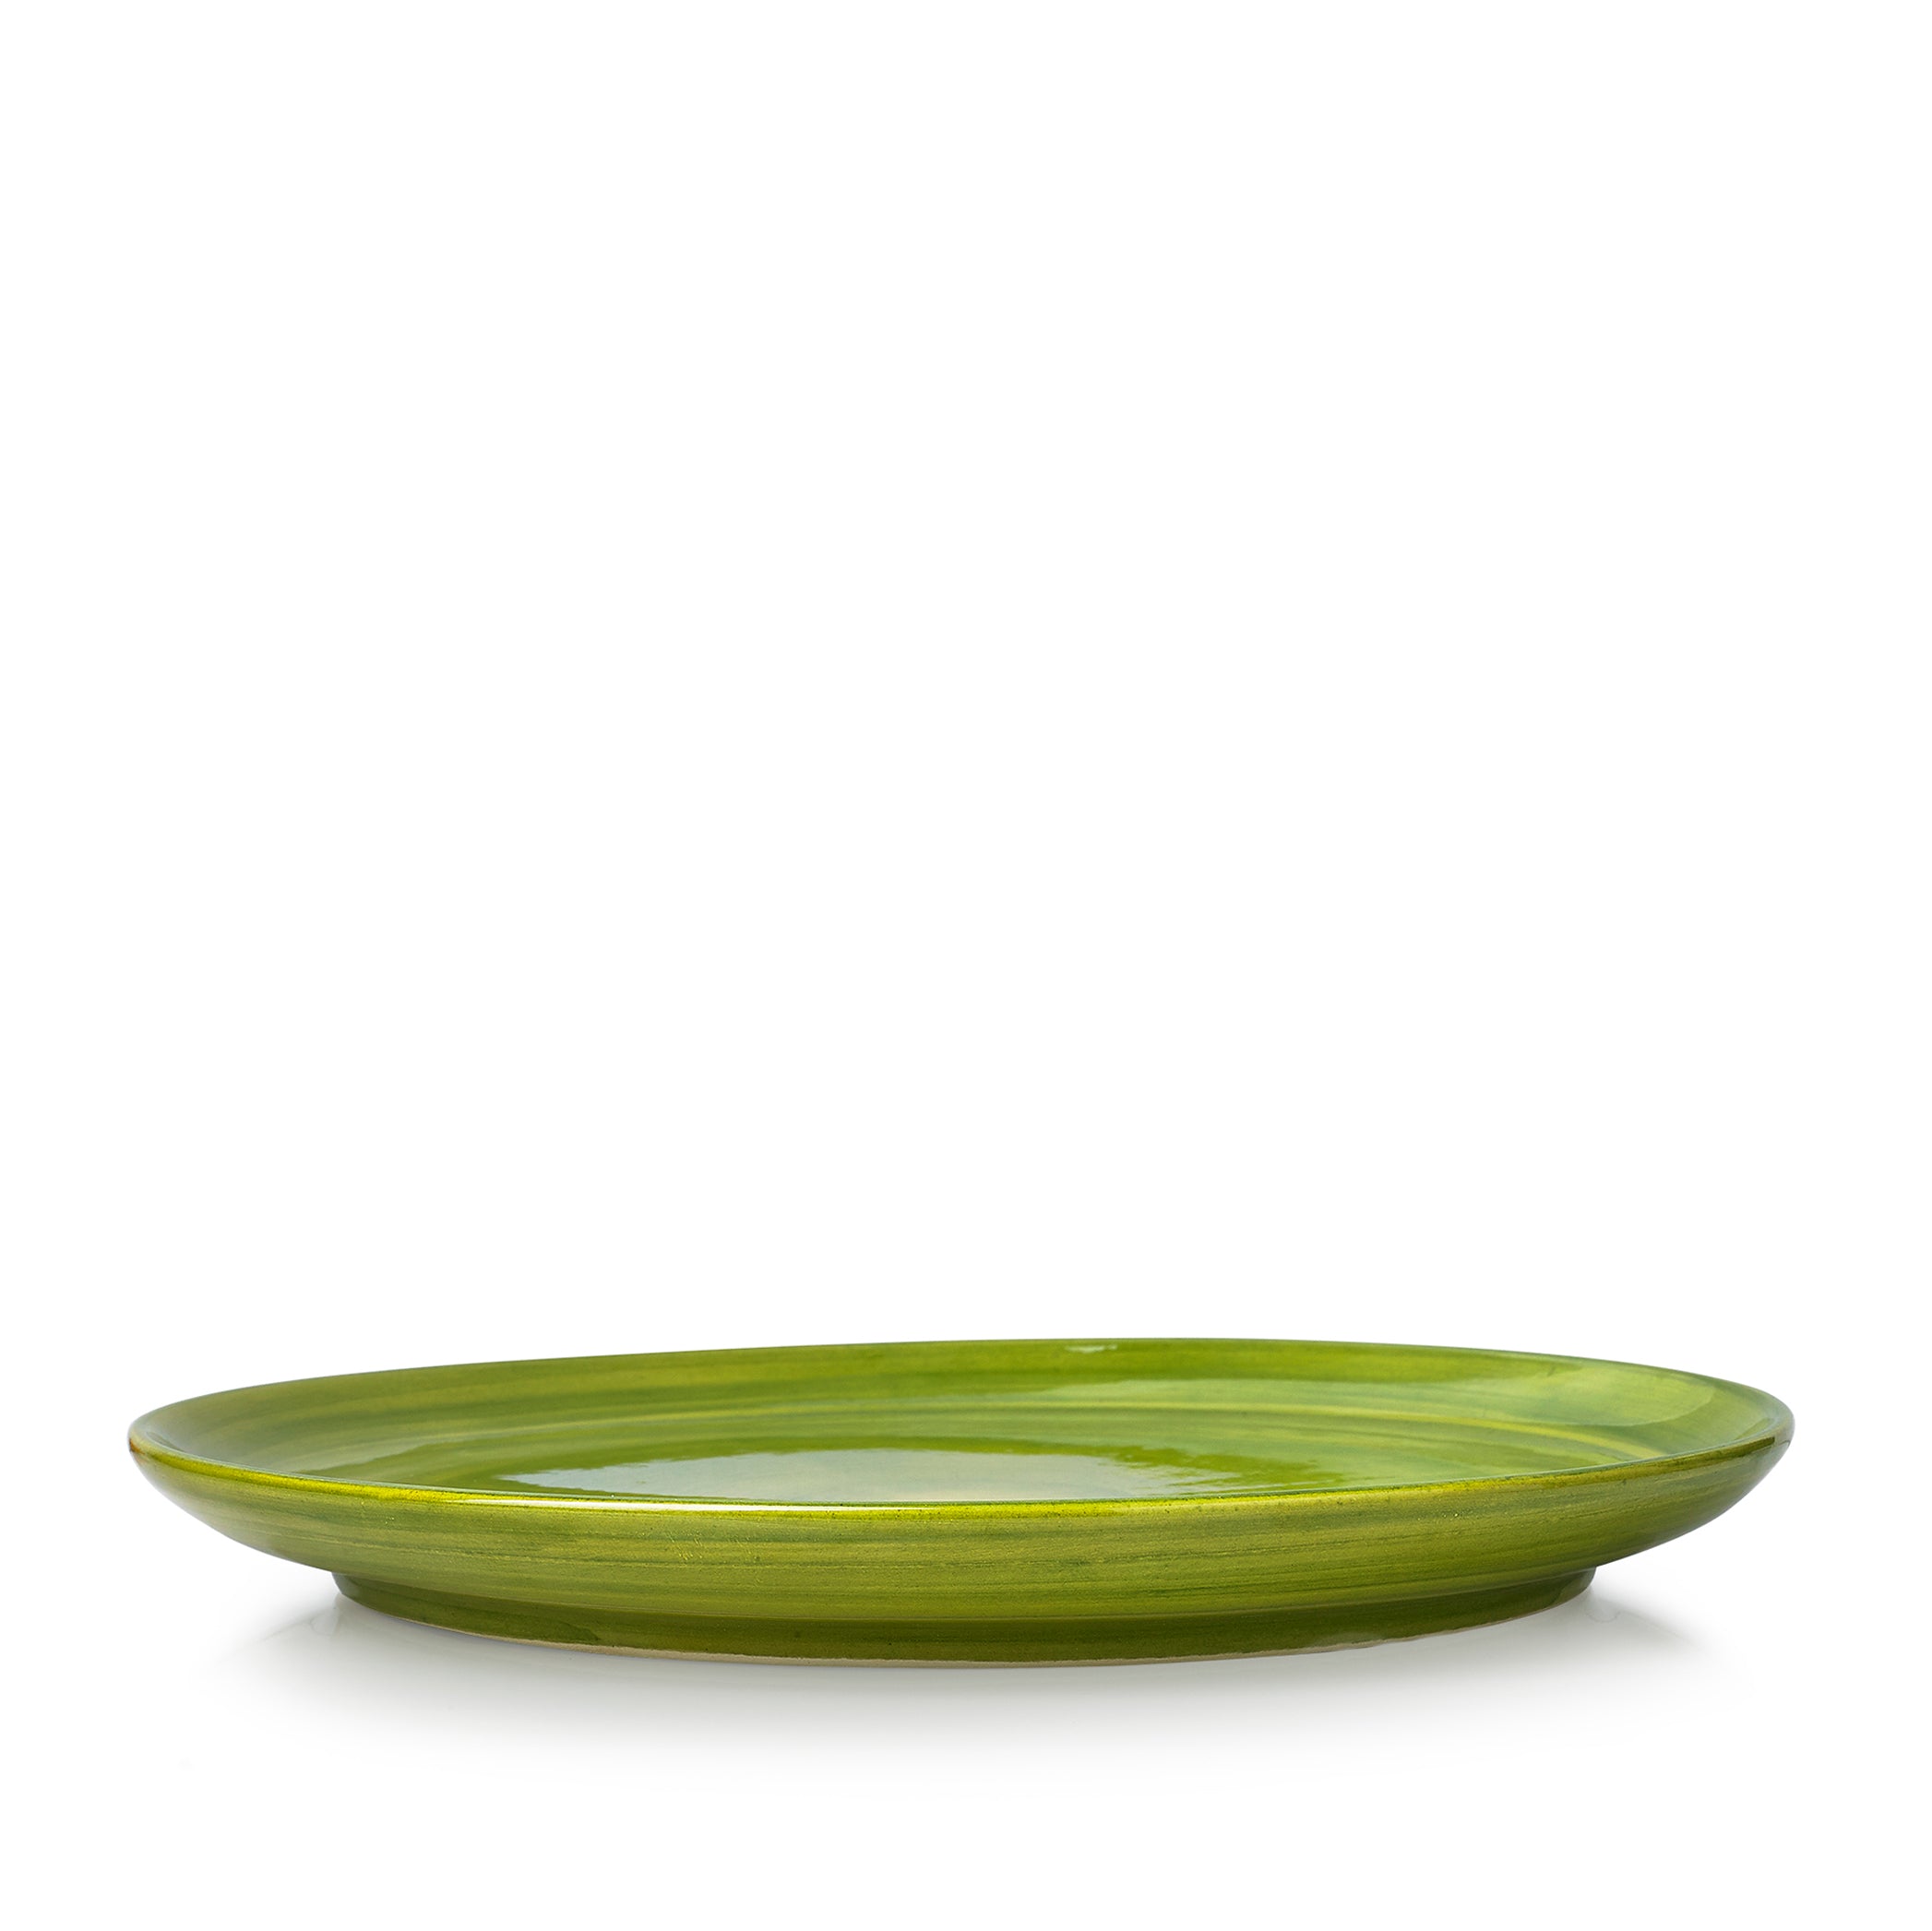 S&B "La Couronne" 26cm Ceramic Dinner Plate in Green